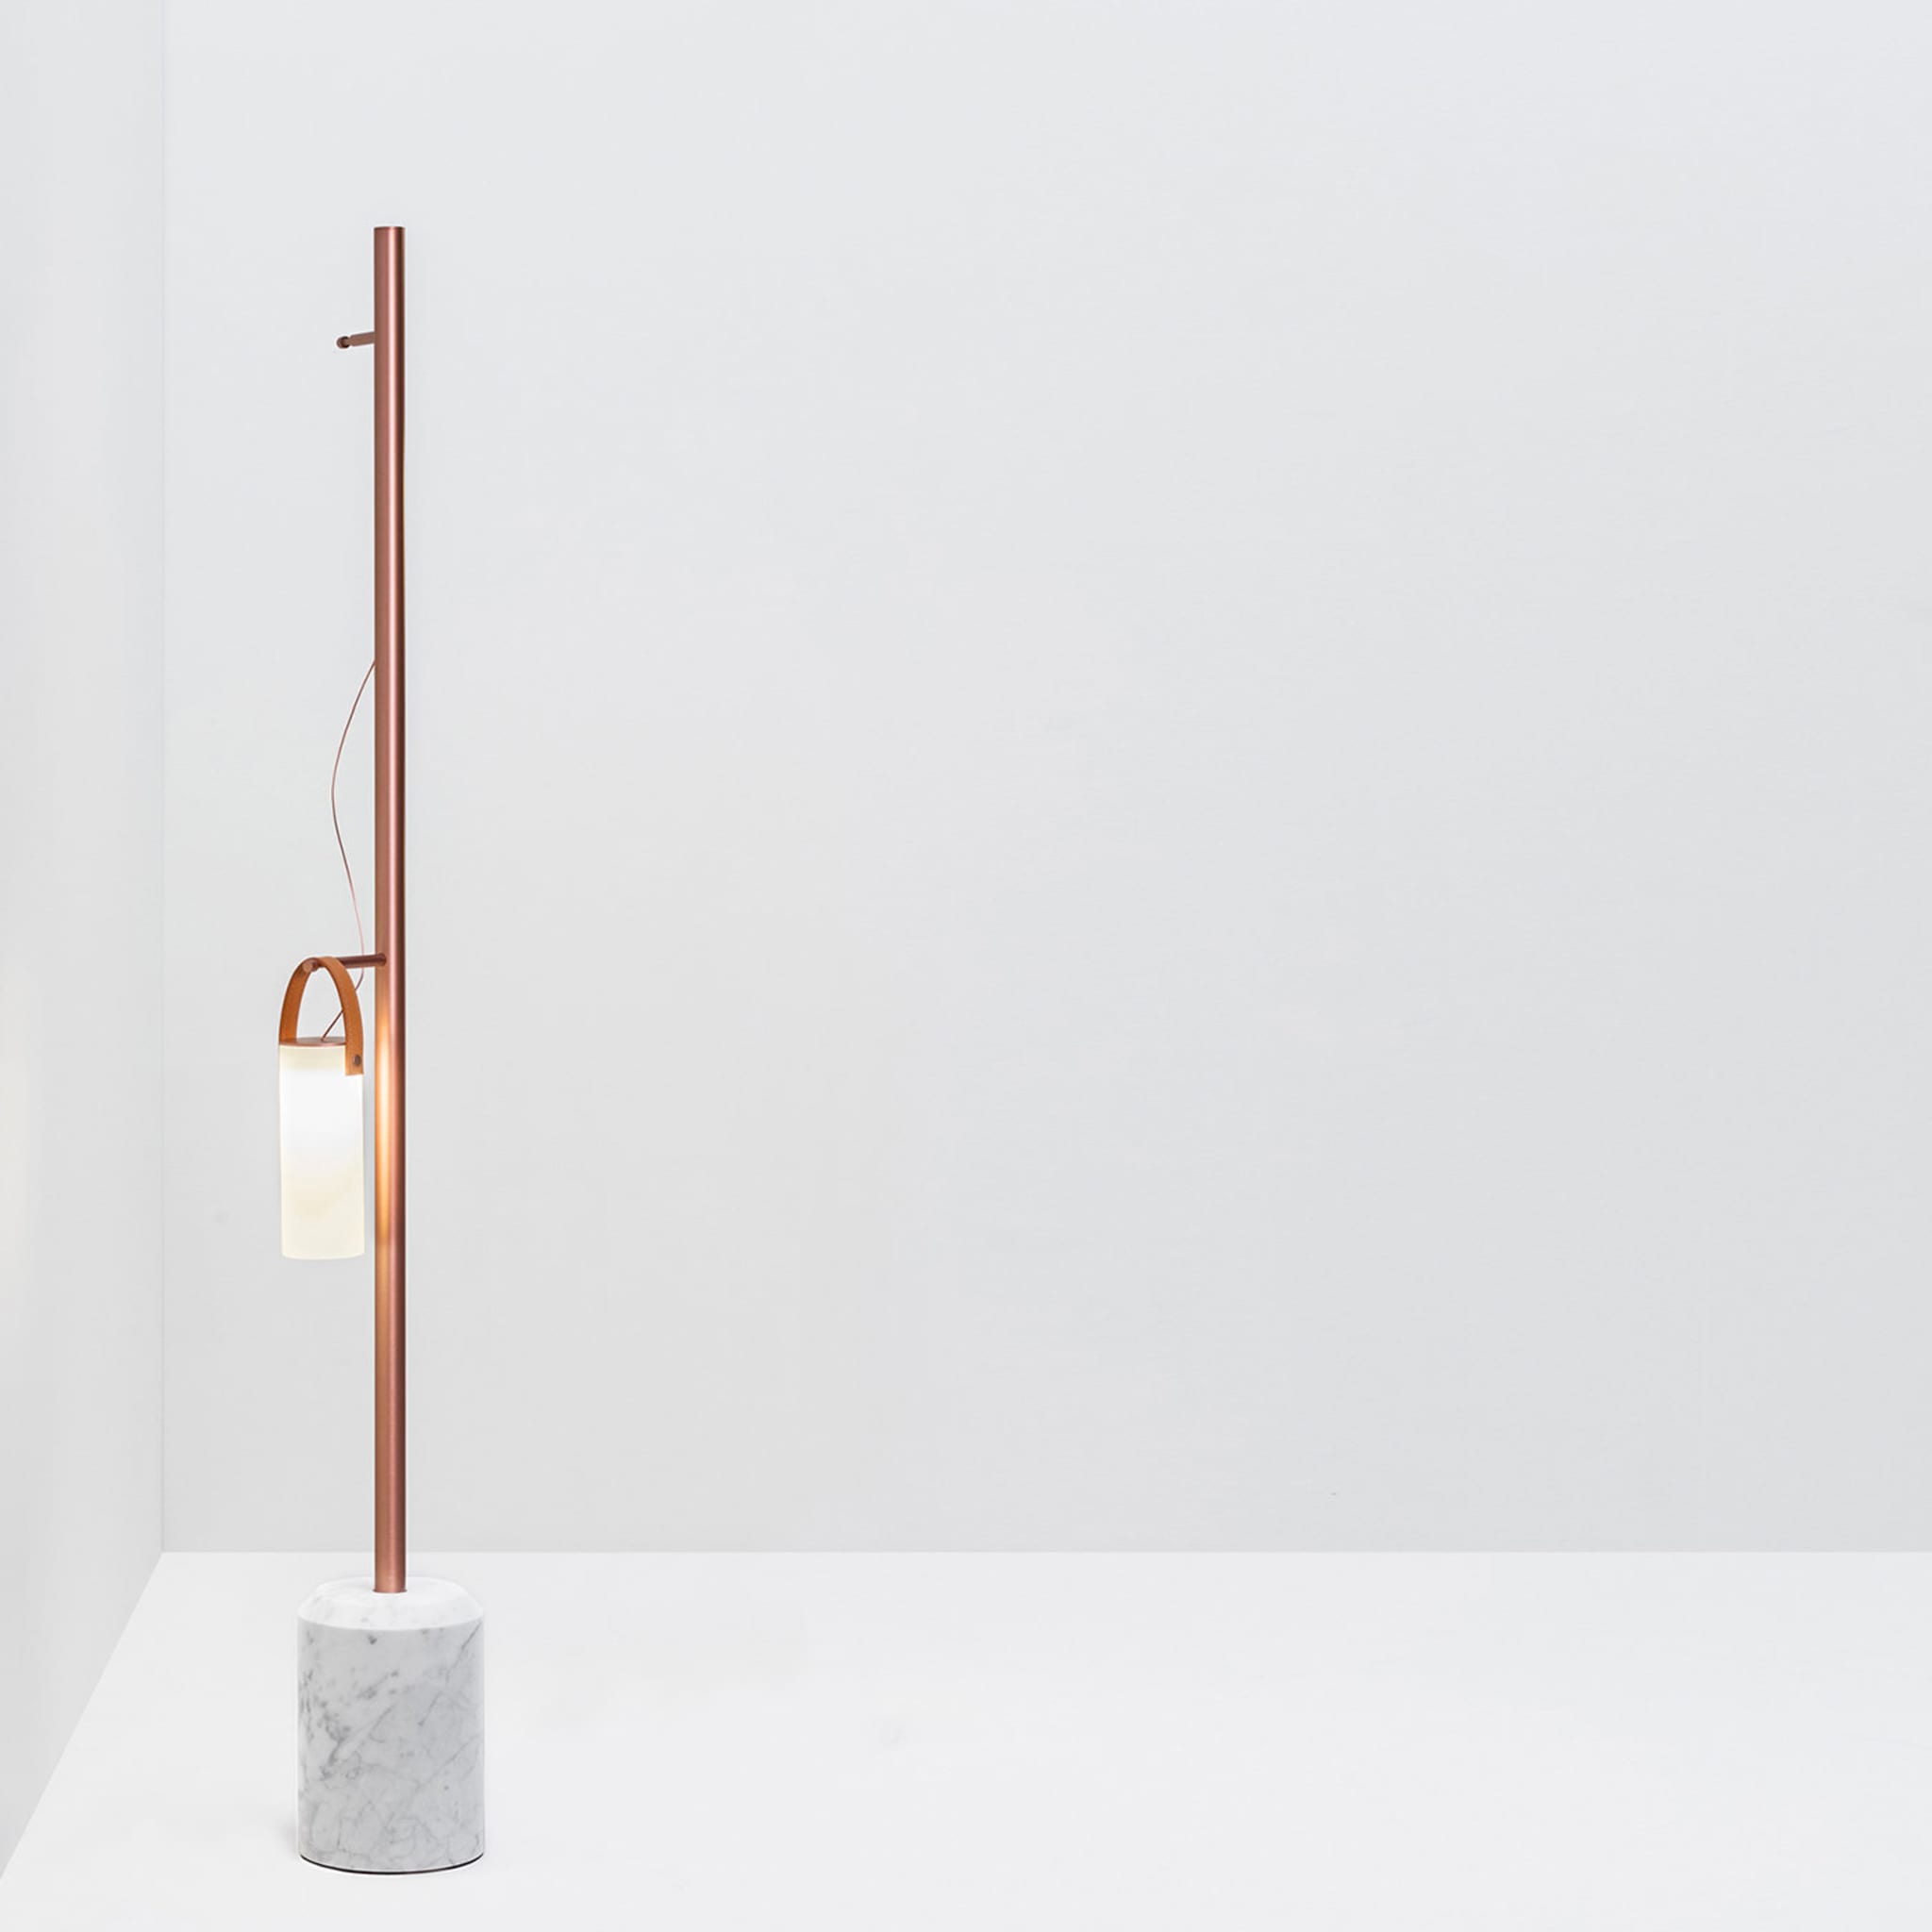 Galerie 1-Diffuser Floor Lamp by Federico Peri - Alternative view 2